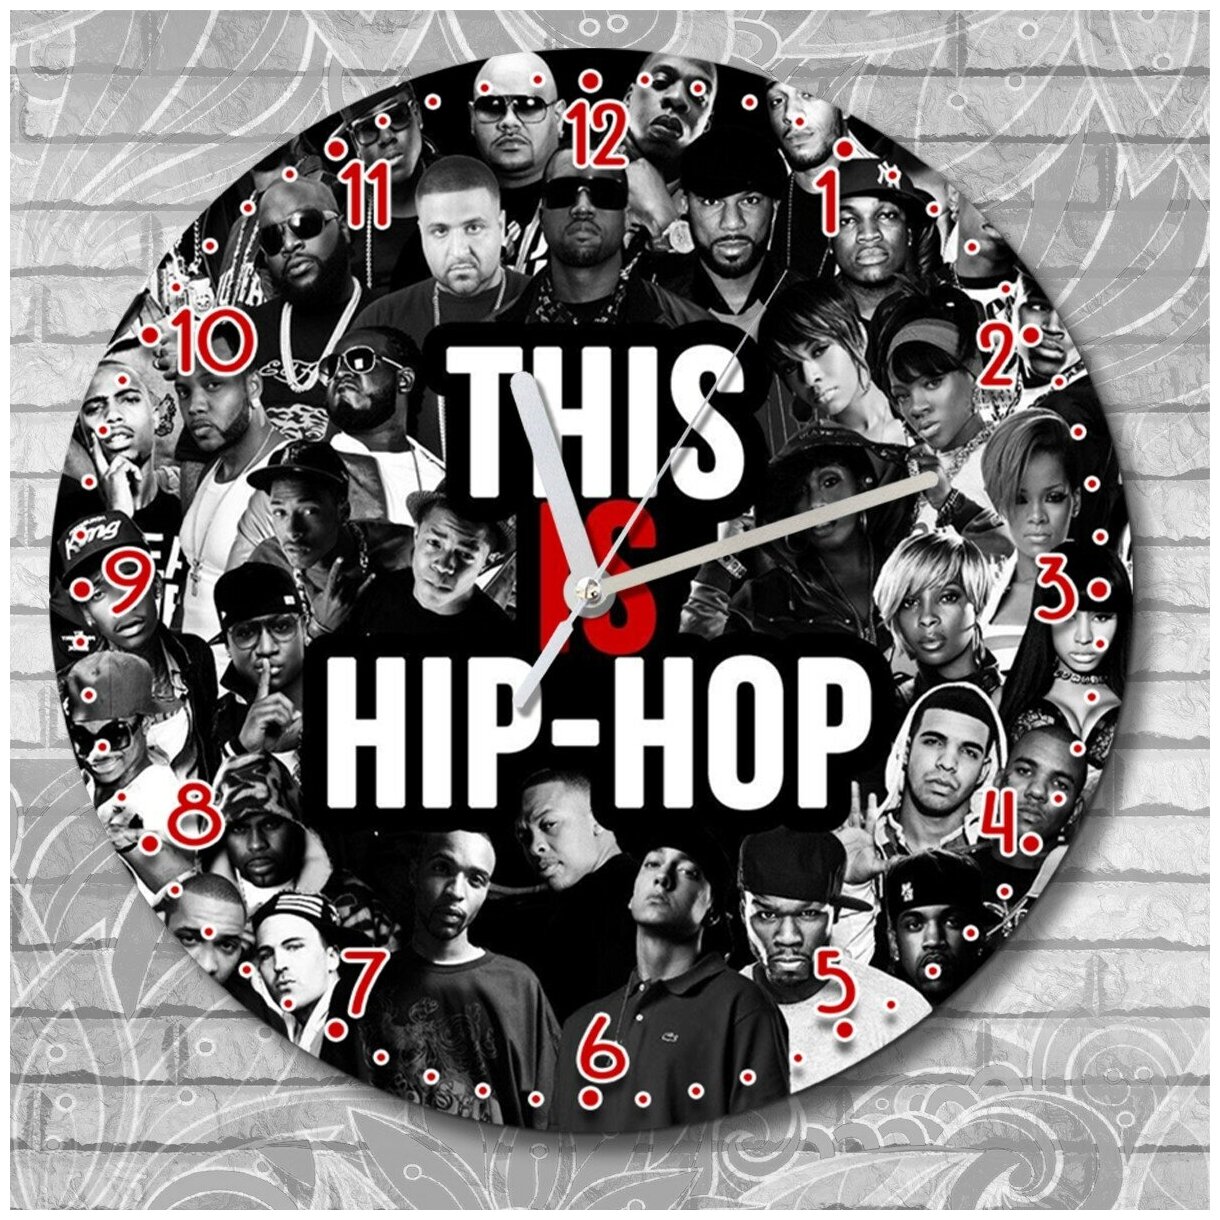 Настенные часы УФ музыка (music, rap, hip hop, sound, руки вверх, hands up, style, life) - 2003